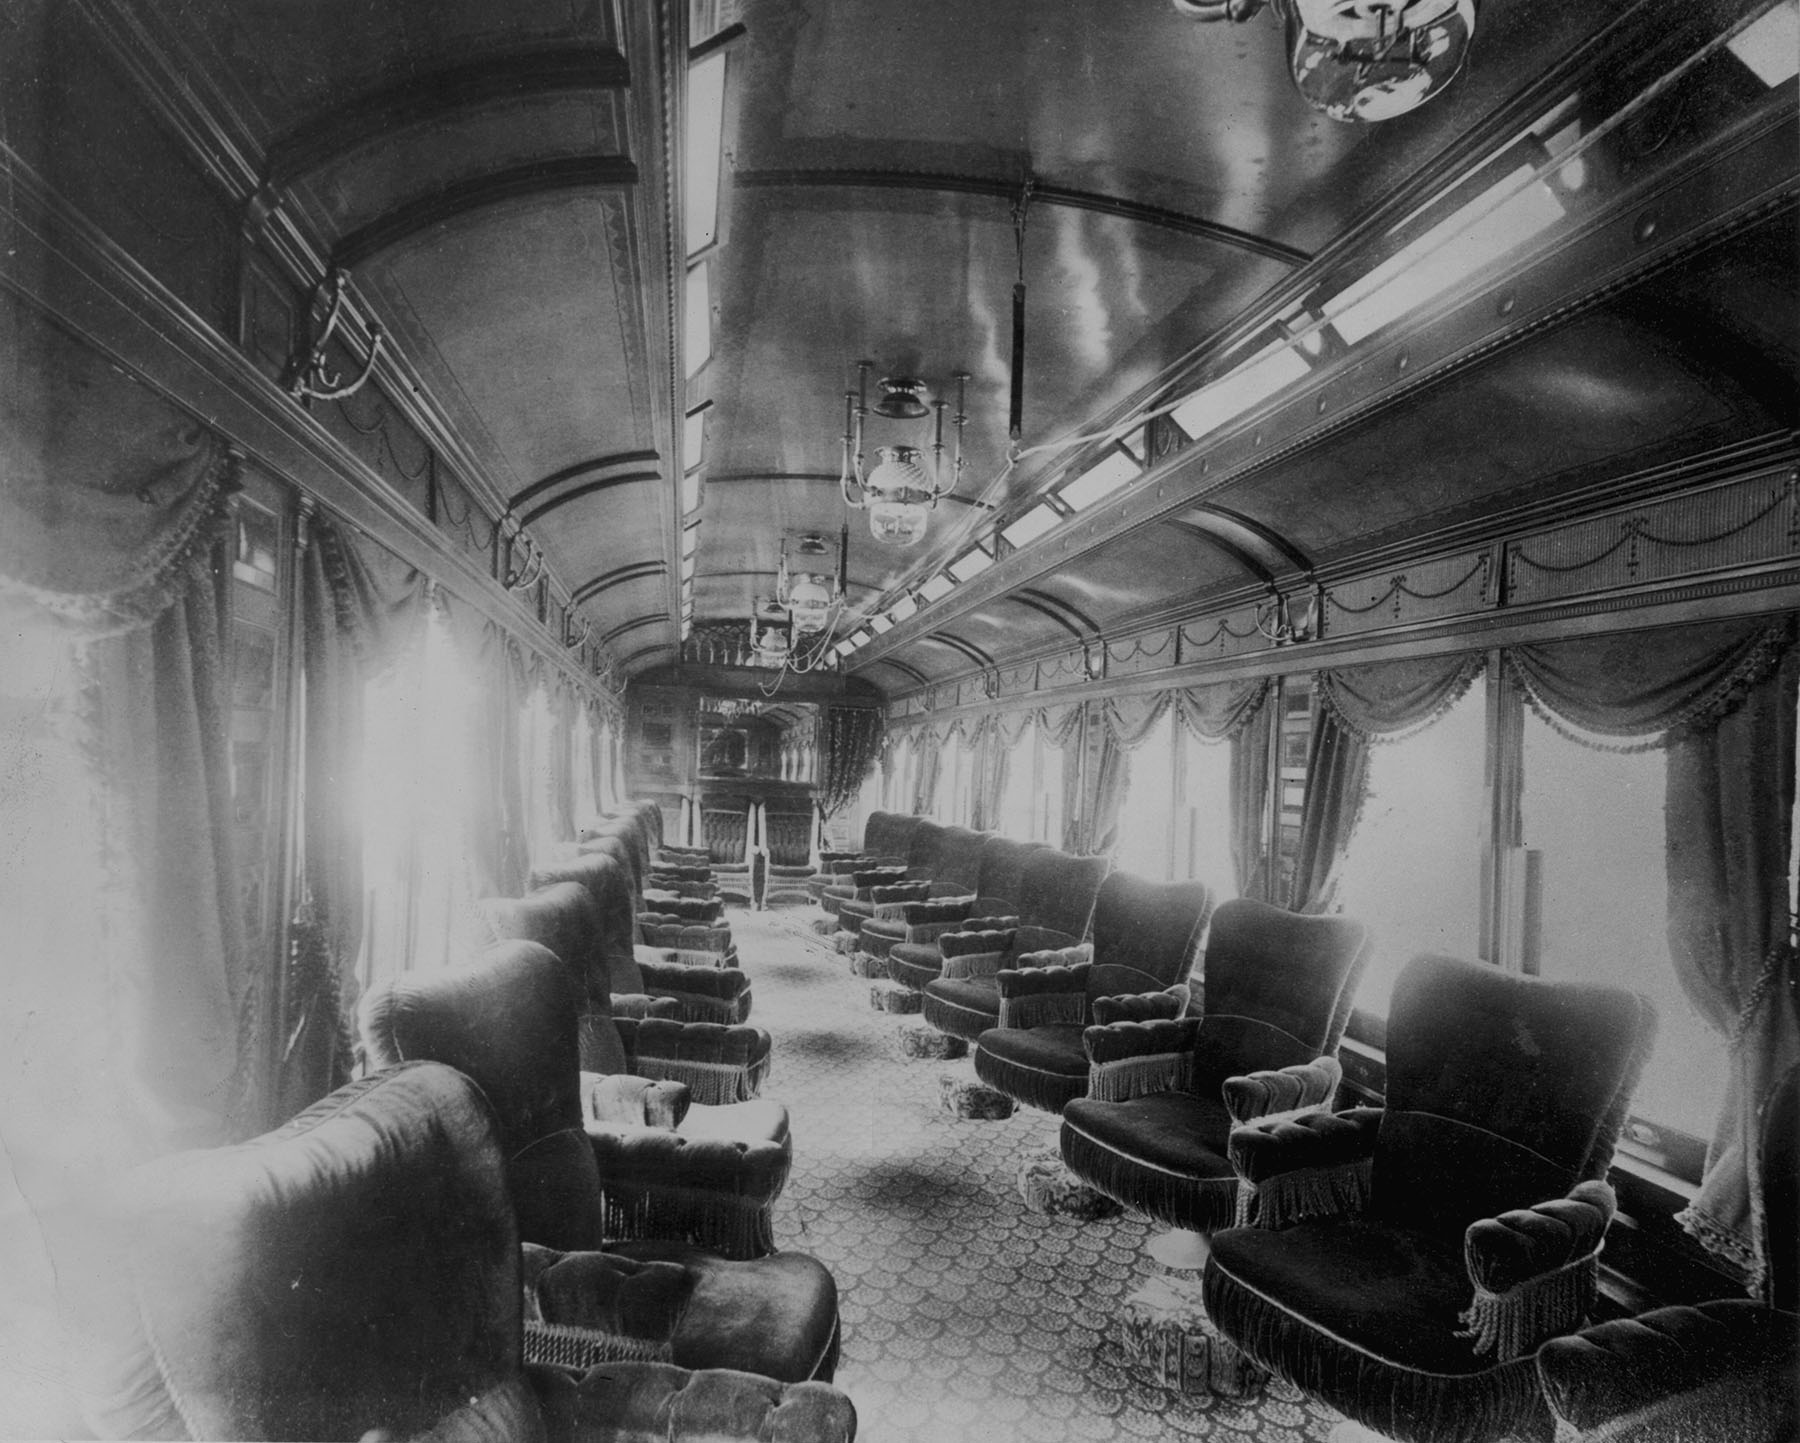 New York & New England Railroad White Train parlor car